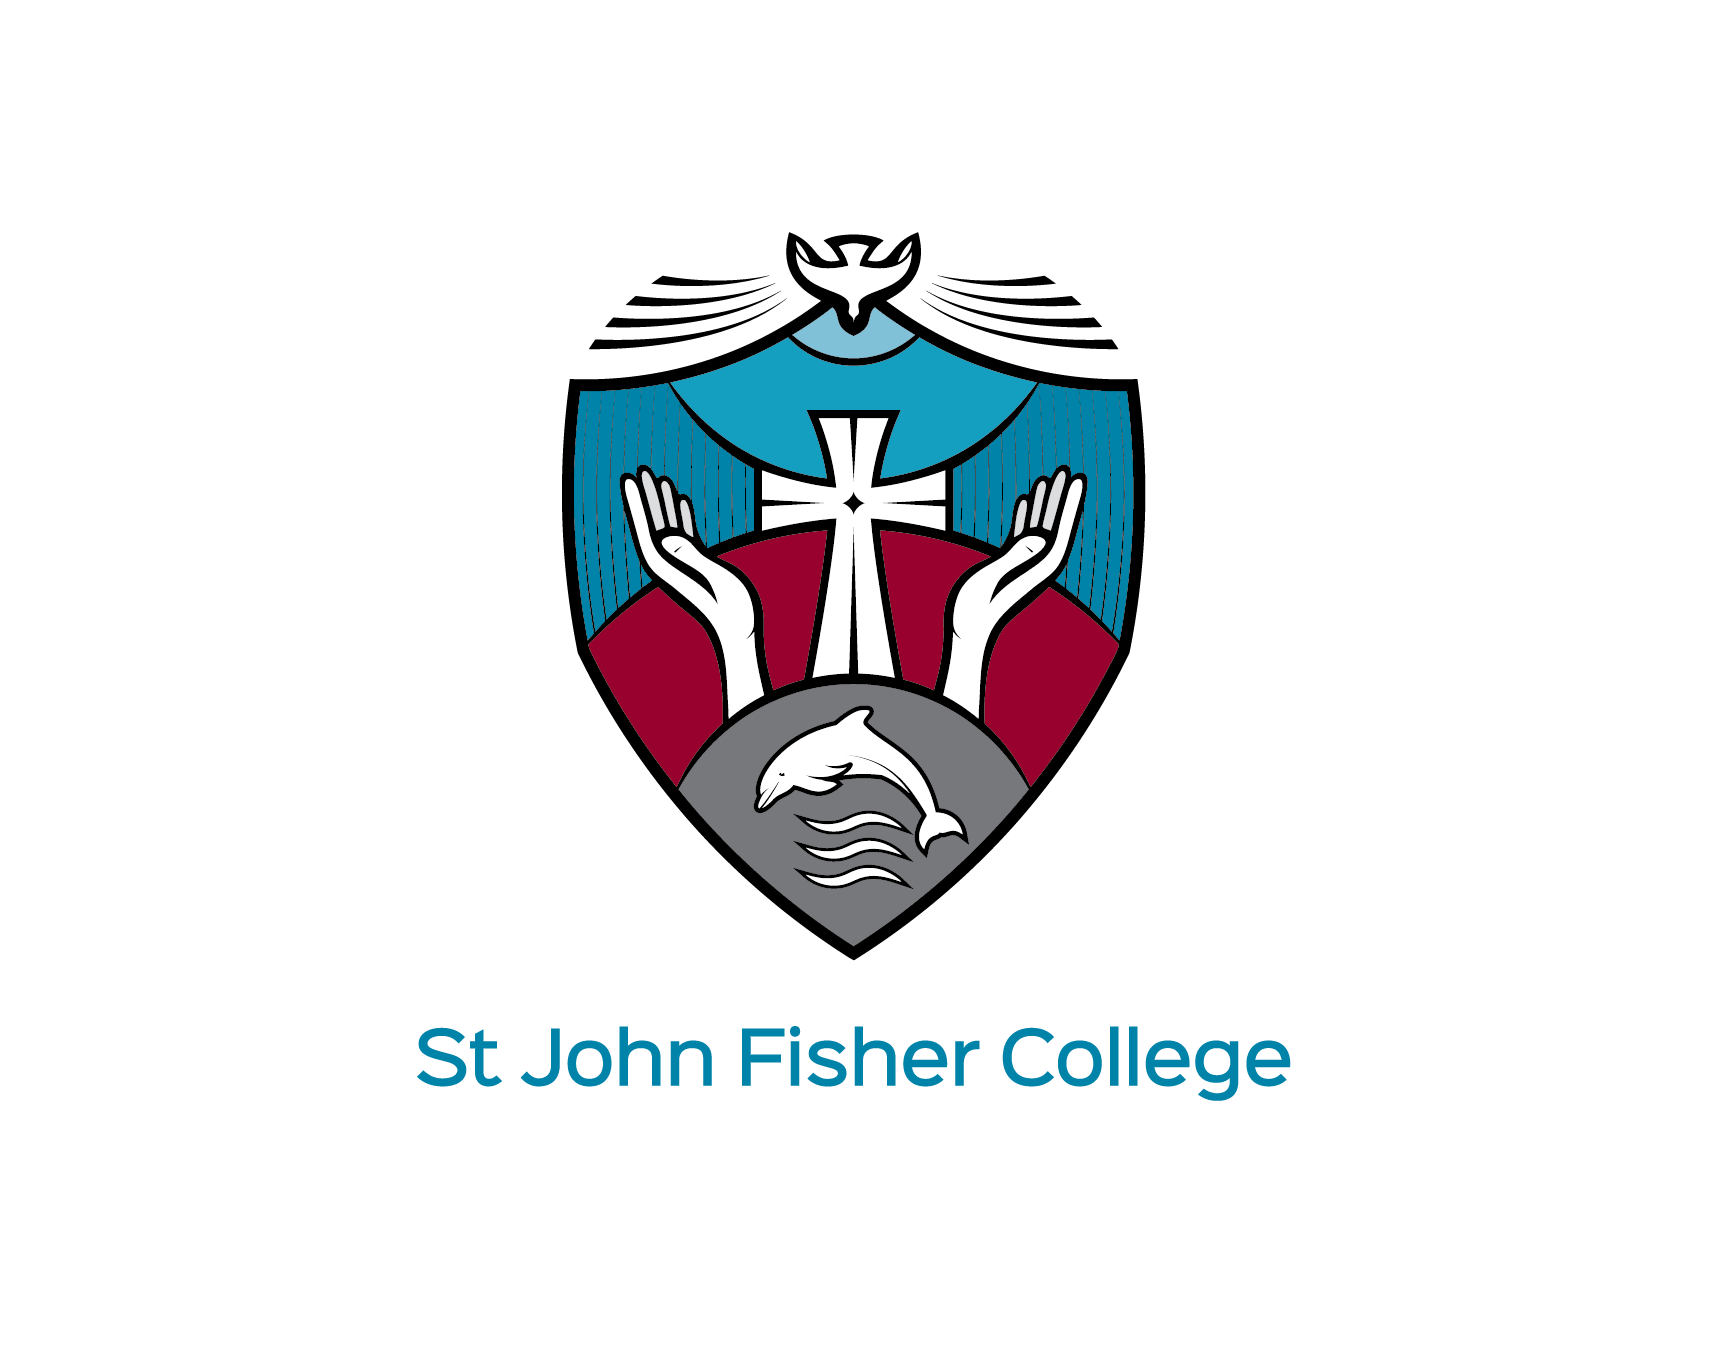 fisher college logo